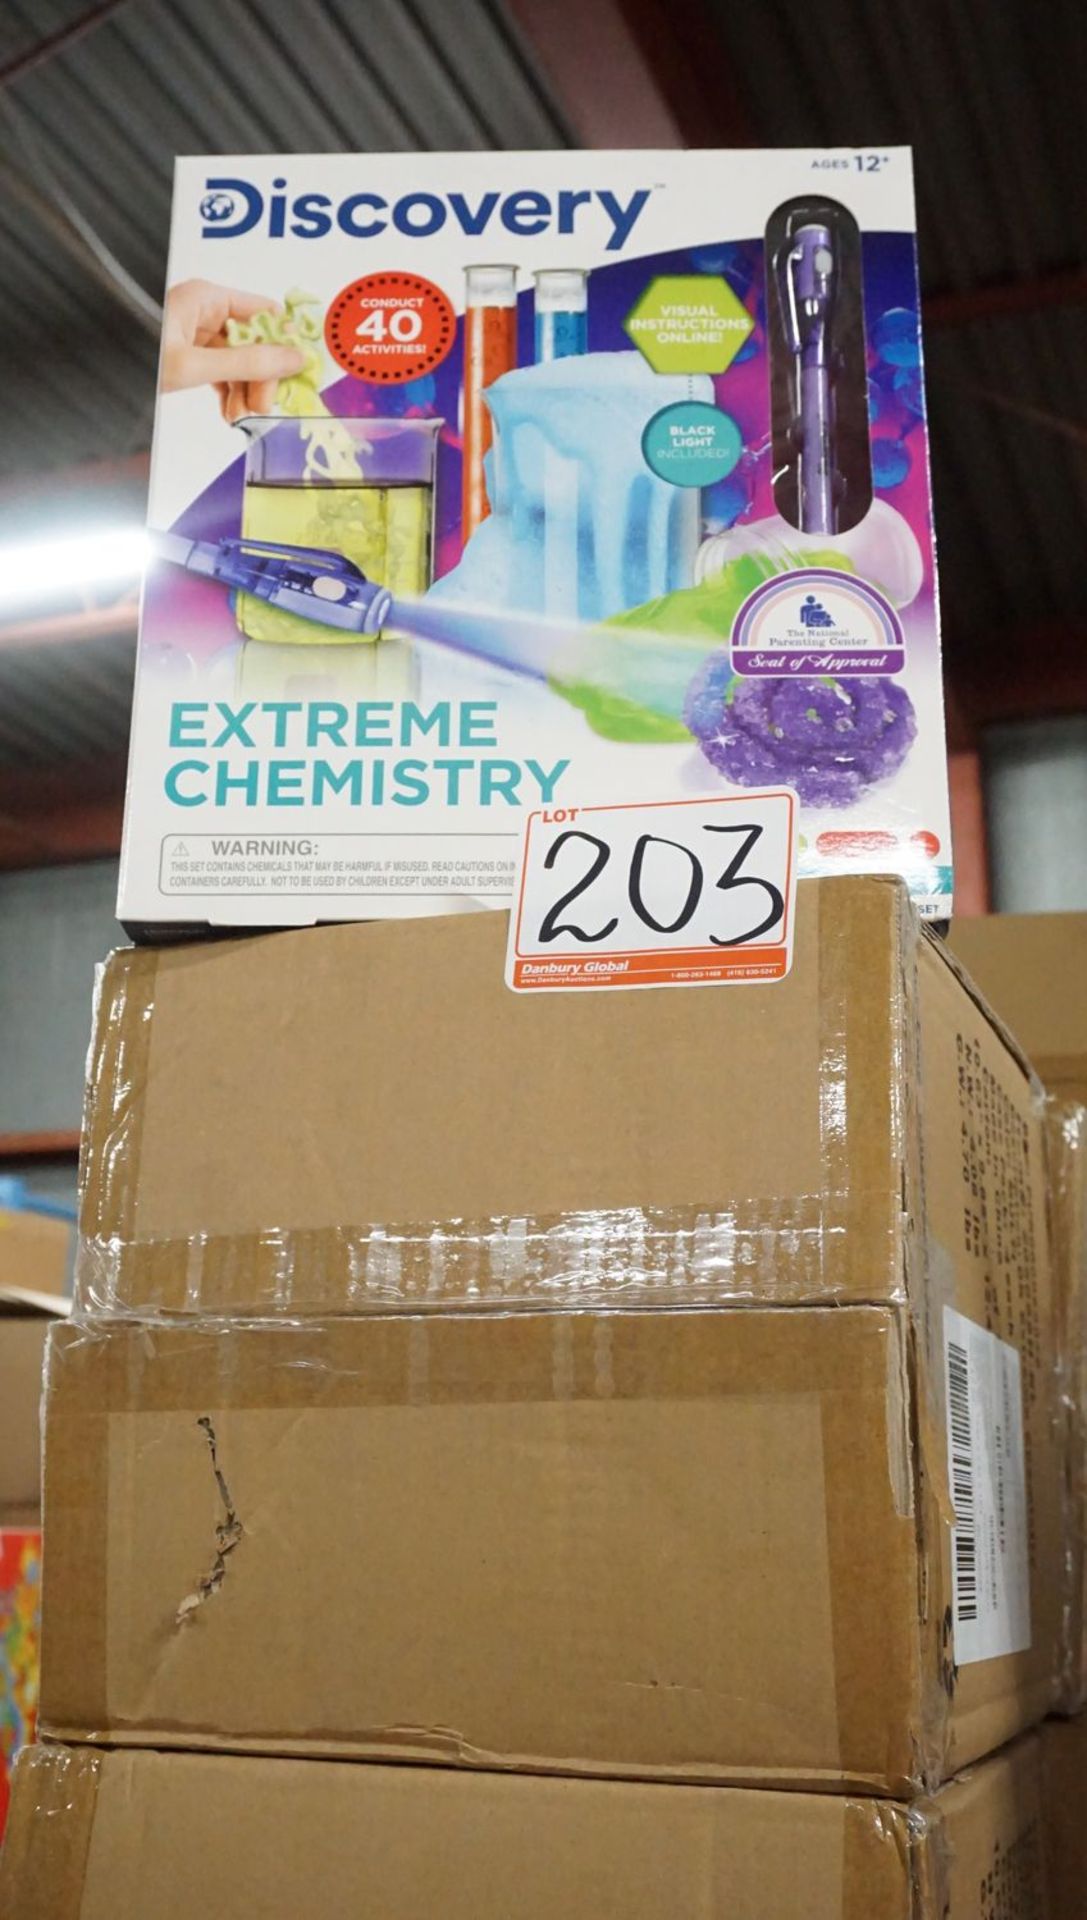 BOXES - DISCOVERY EXTREME CHEMISTRY KITS (4 KITS/BOX)